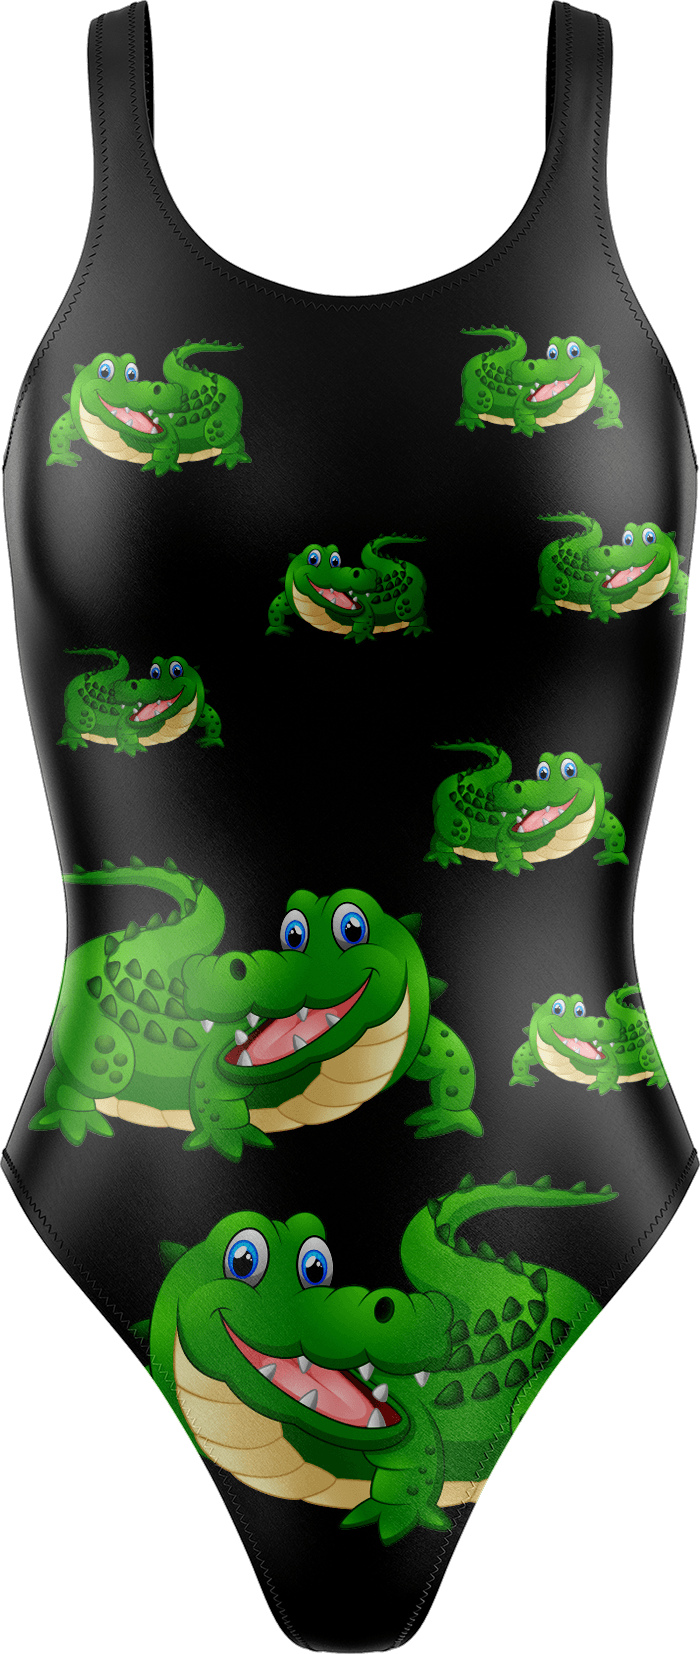 Crazy Croc Swimsuits - fungear.com.au